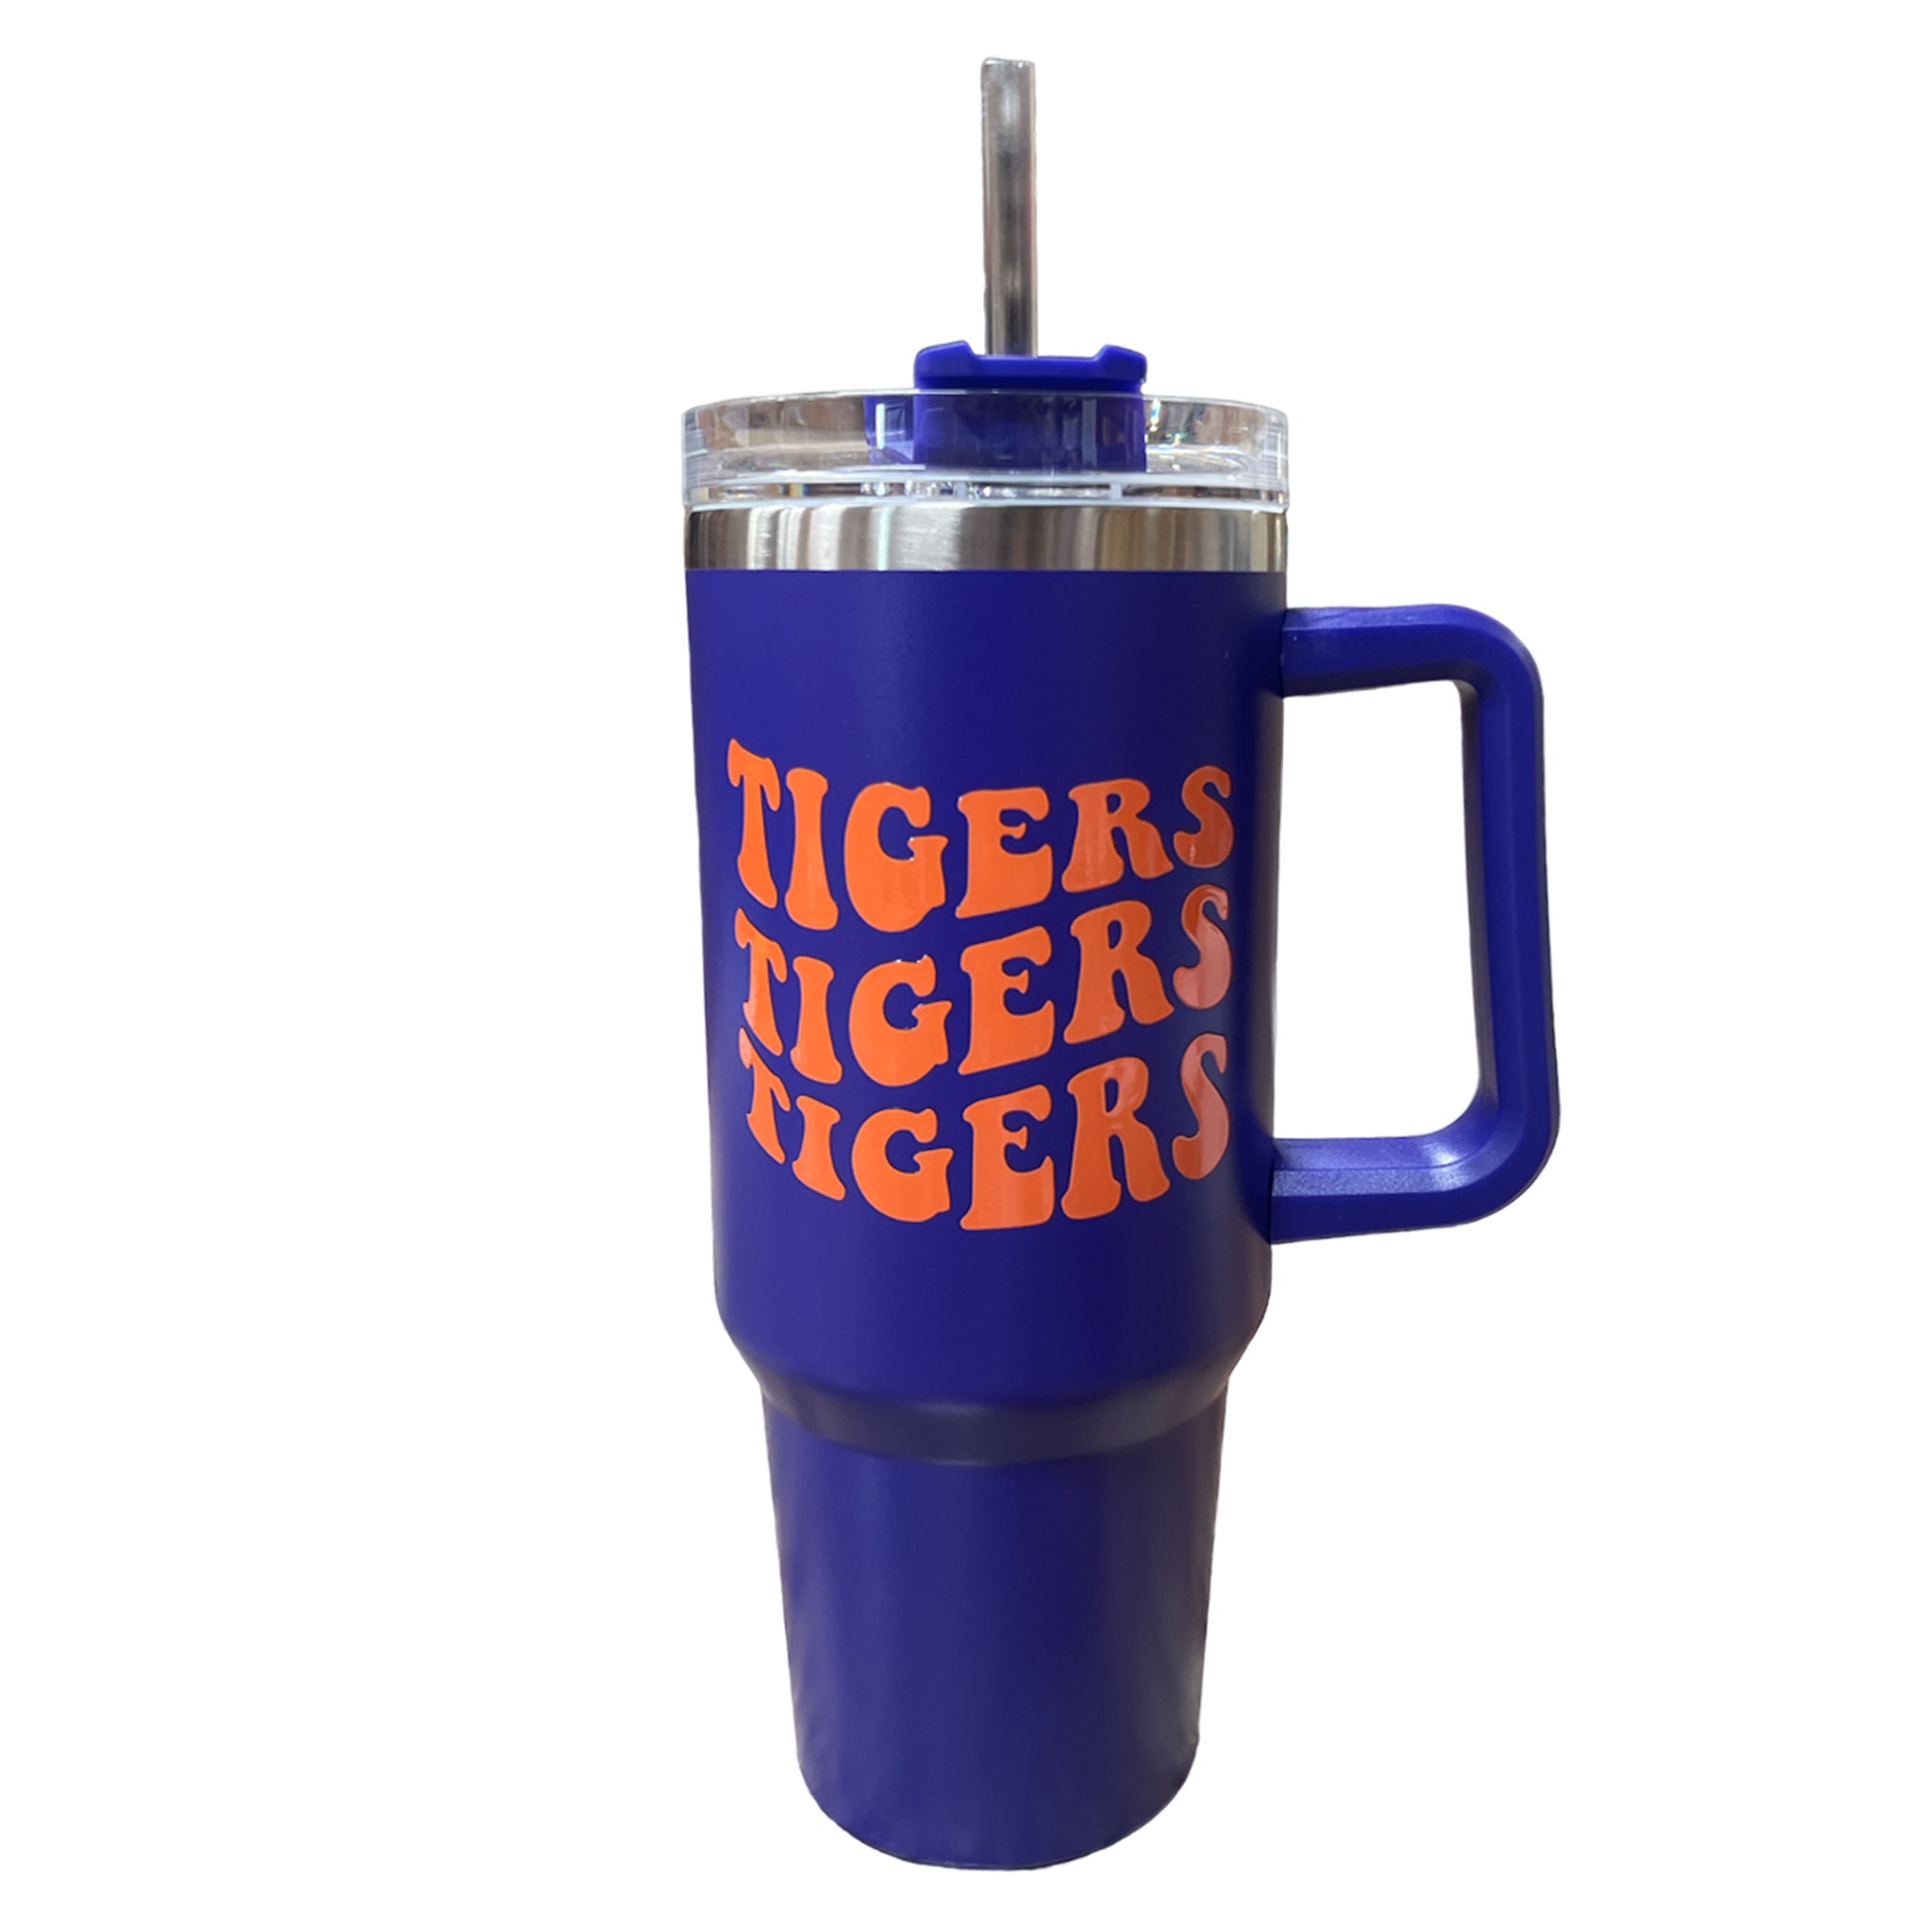 SC-4412-W Morgan Tumbler Tiger Purple/Orange